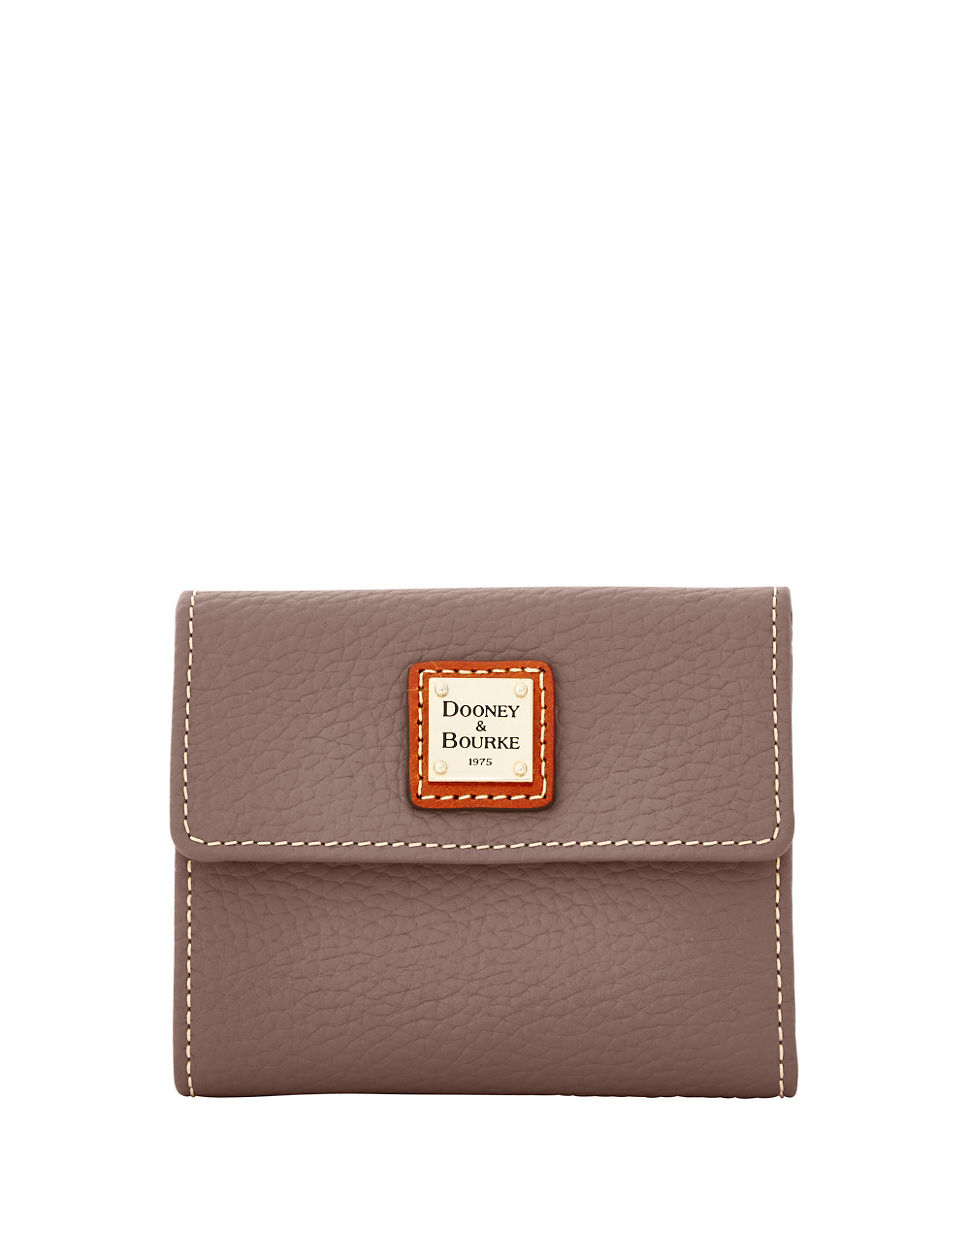 Lyst - Dooney & Bourke Small Leather Card Wallet in Gray